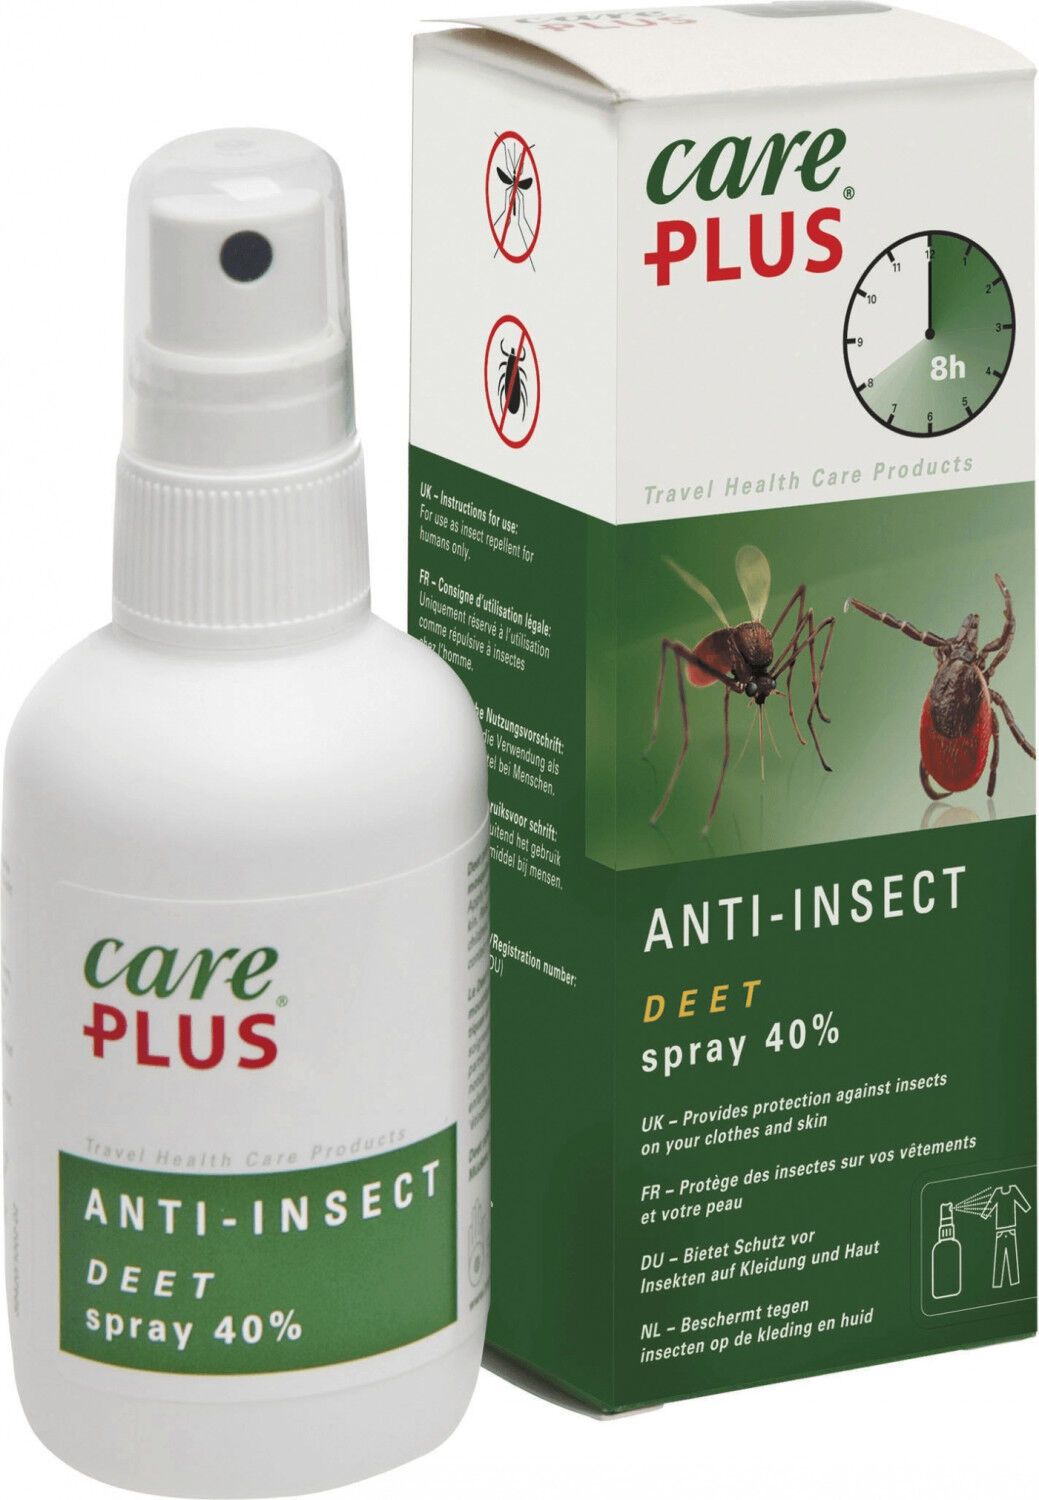 Care Plus Anti-Insect - Deet spray 40% - Insektenschutz